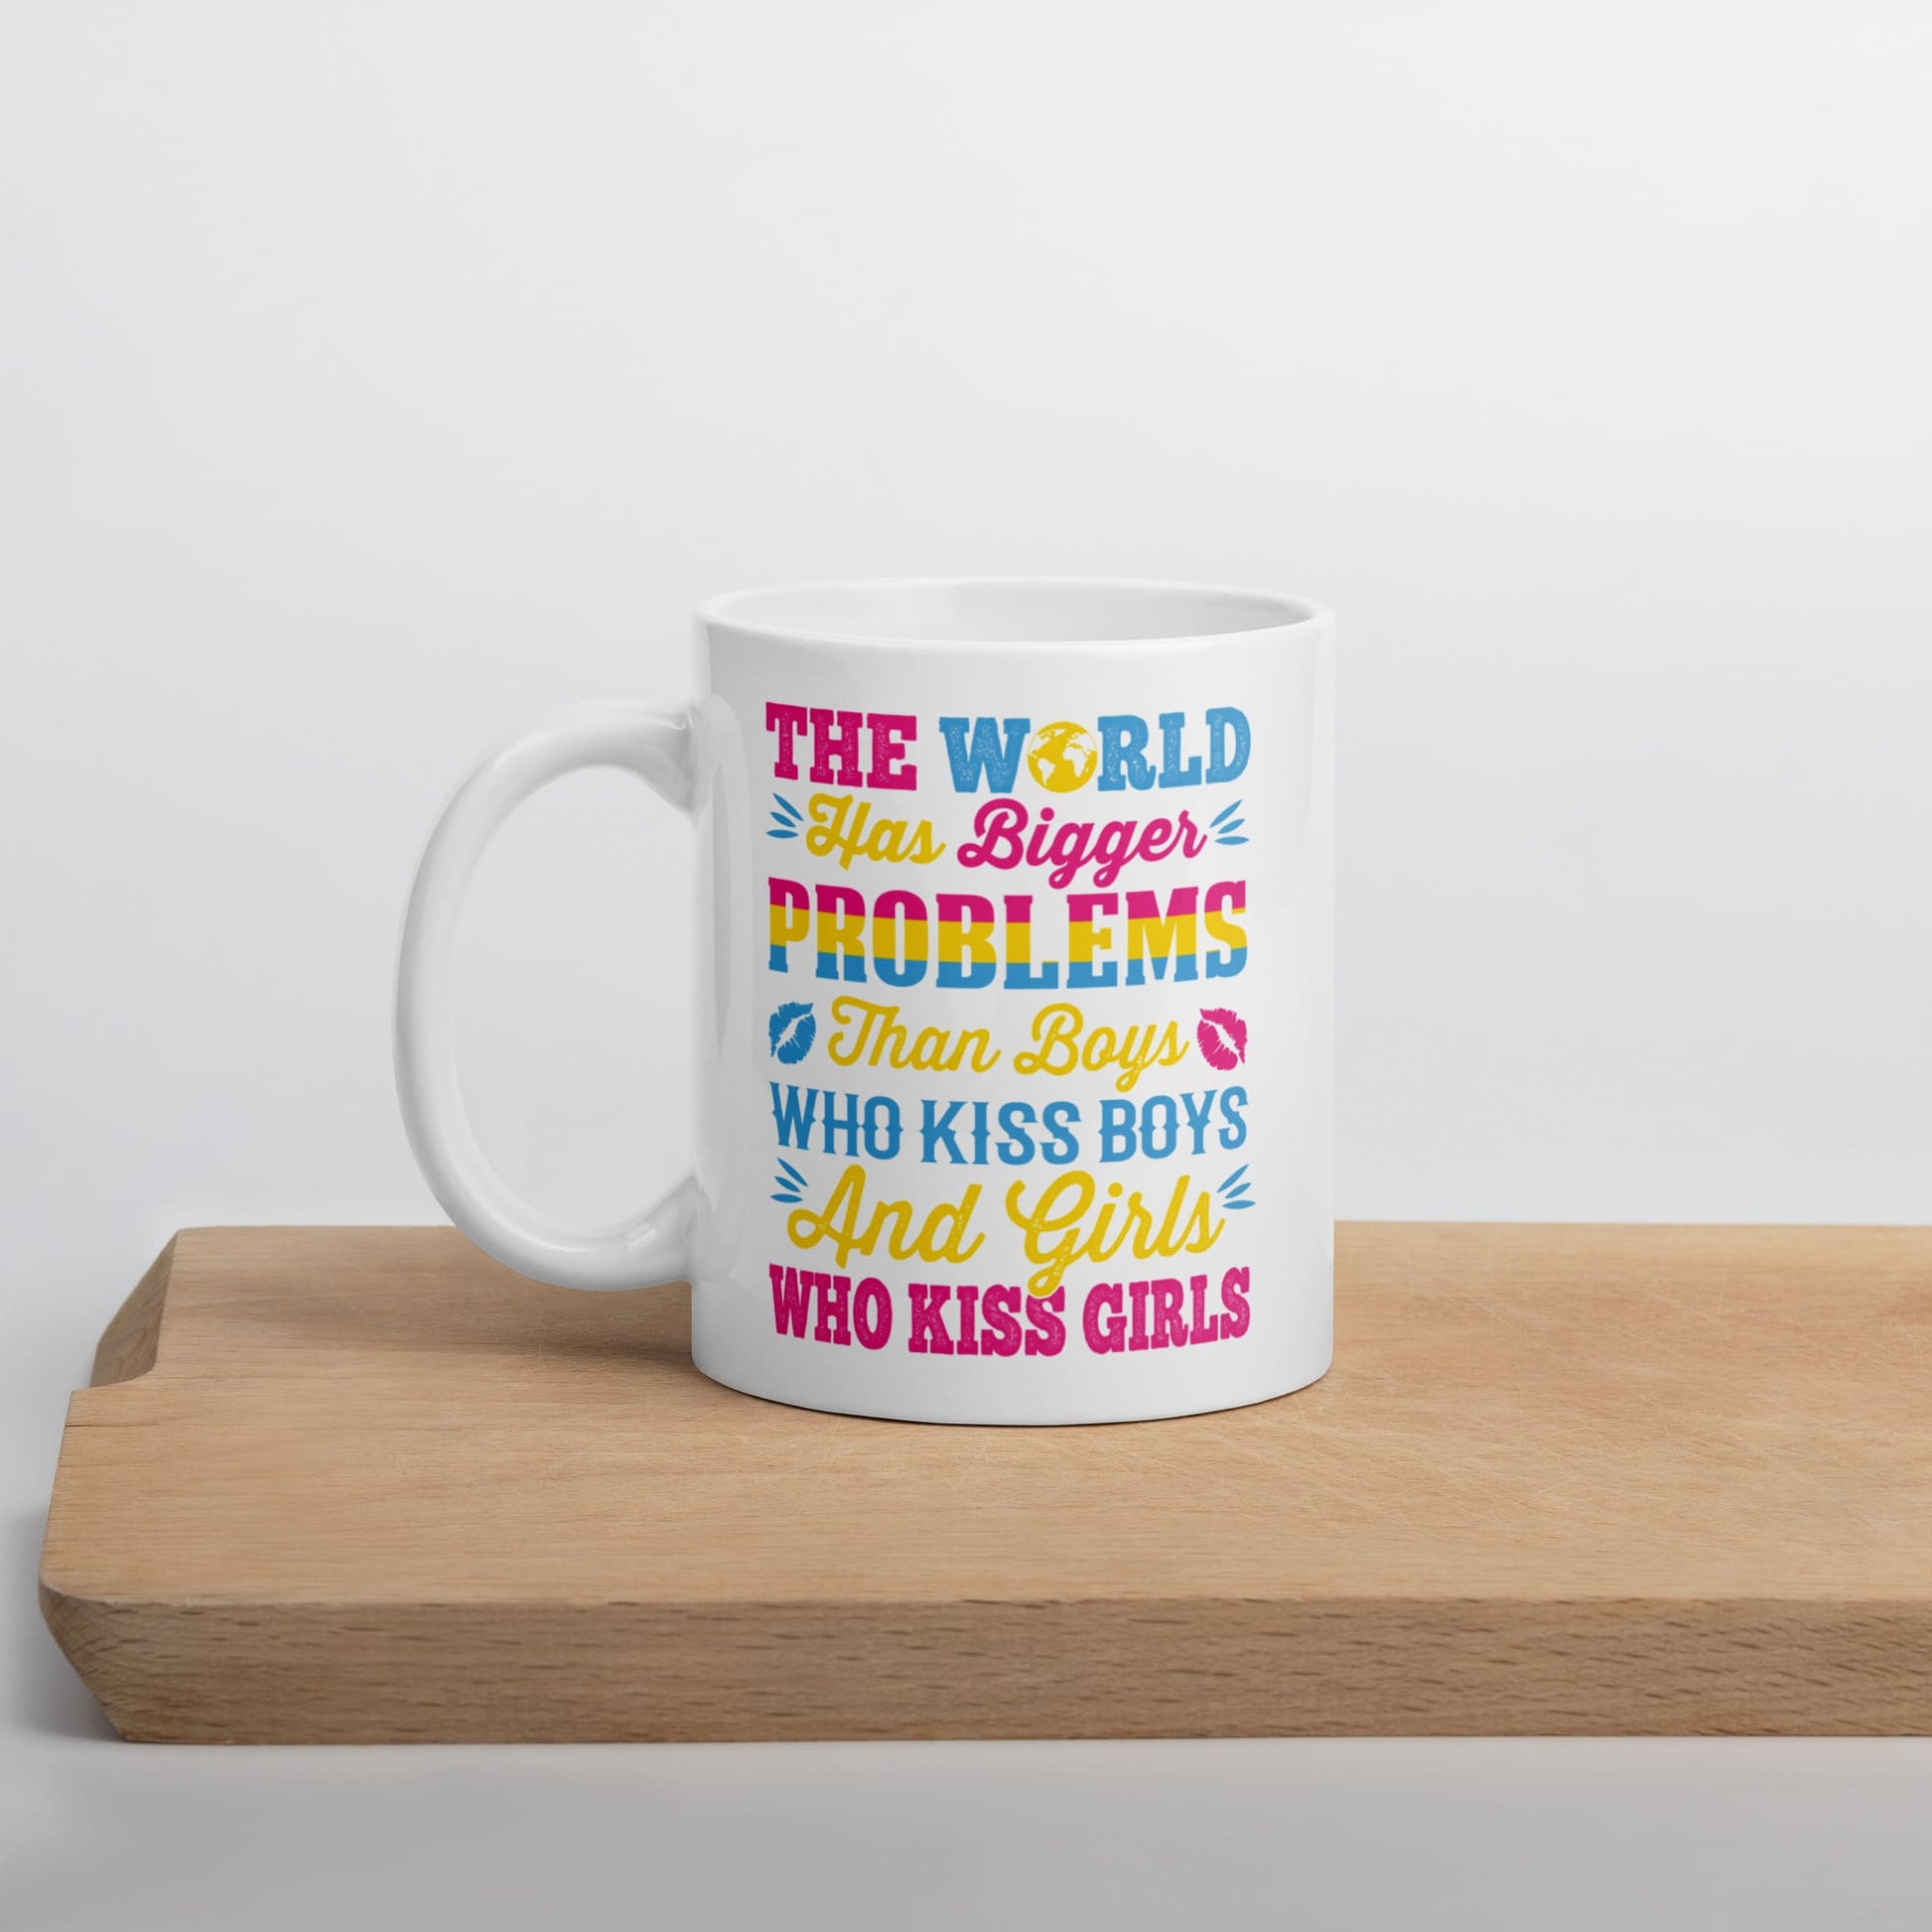 pansexual mug, statement pan pride coffee or tea cup on table